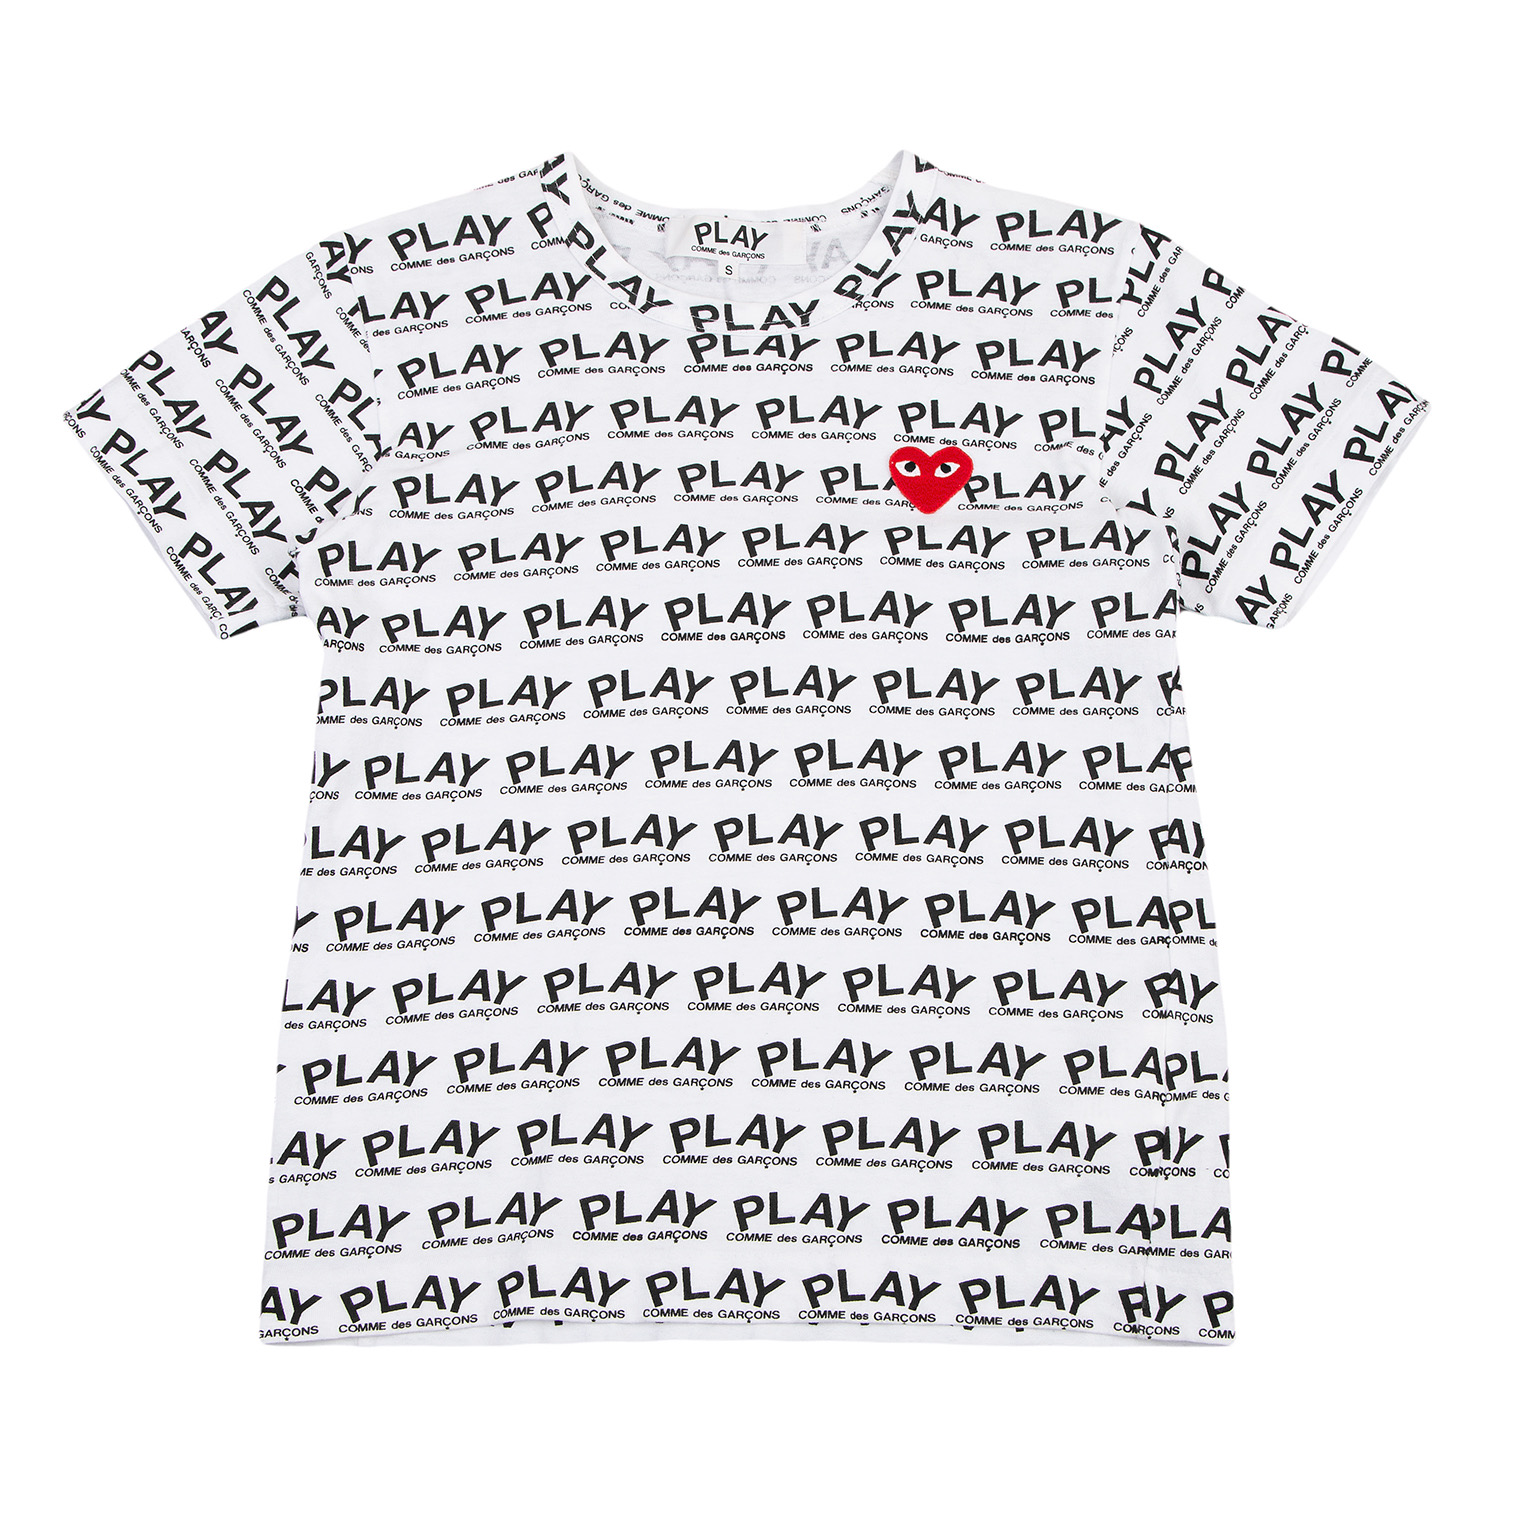 COMME des GARCONS Tシャツ 刺繍ロゴ ワンポイントロゴ - Tシャツ